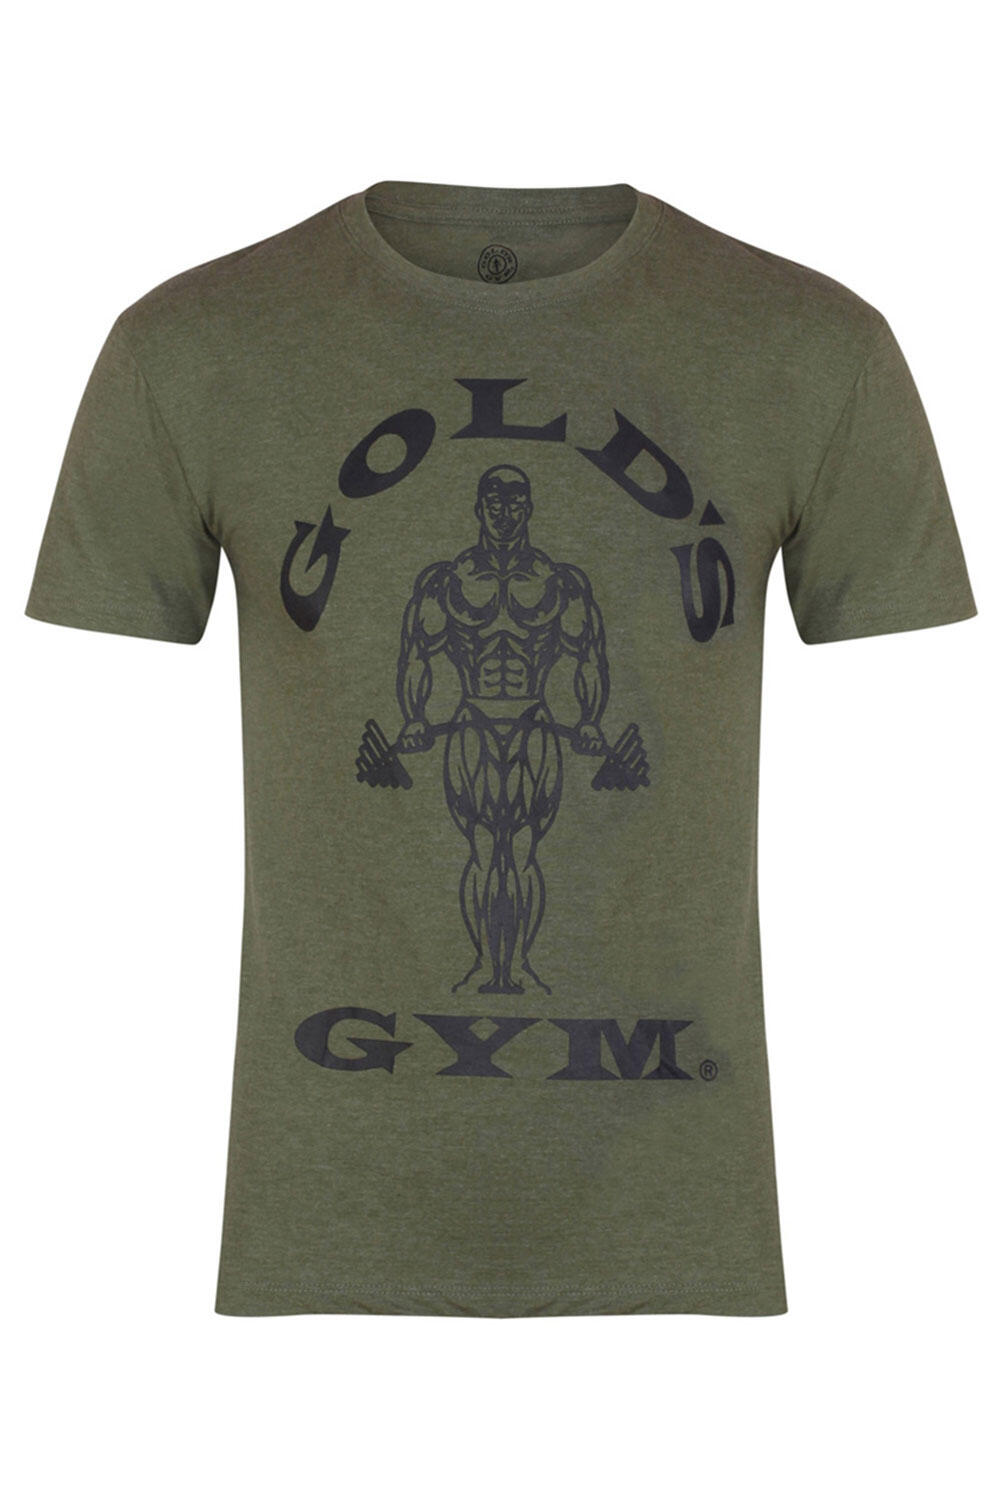 Men's Gold's Gym Muscle Joe Print T-Shirt 2/4